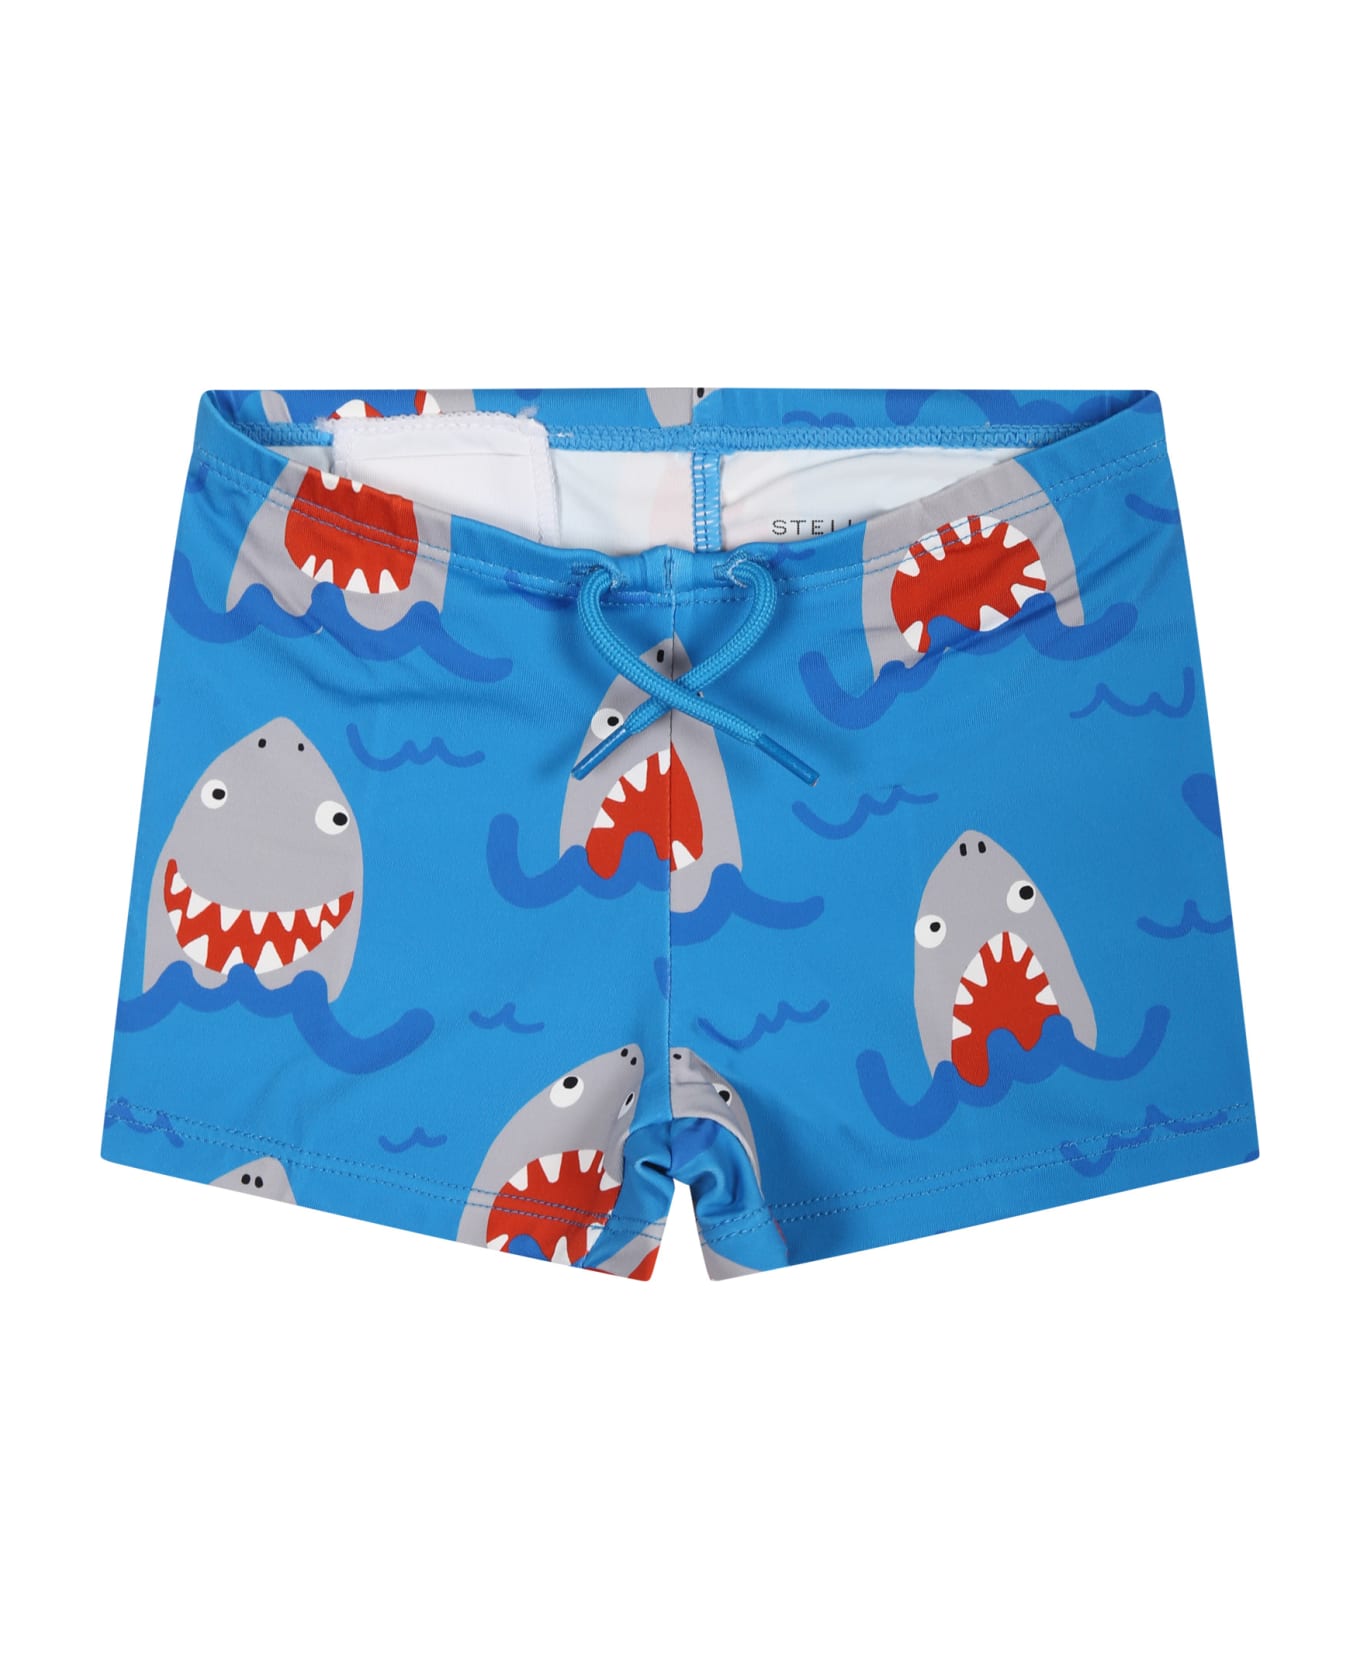 Stella McCartney Light Blue Boxer Shorts For Baby Boy With All-over Shark Print - Celeste